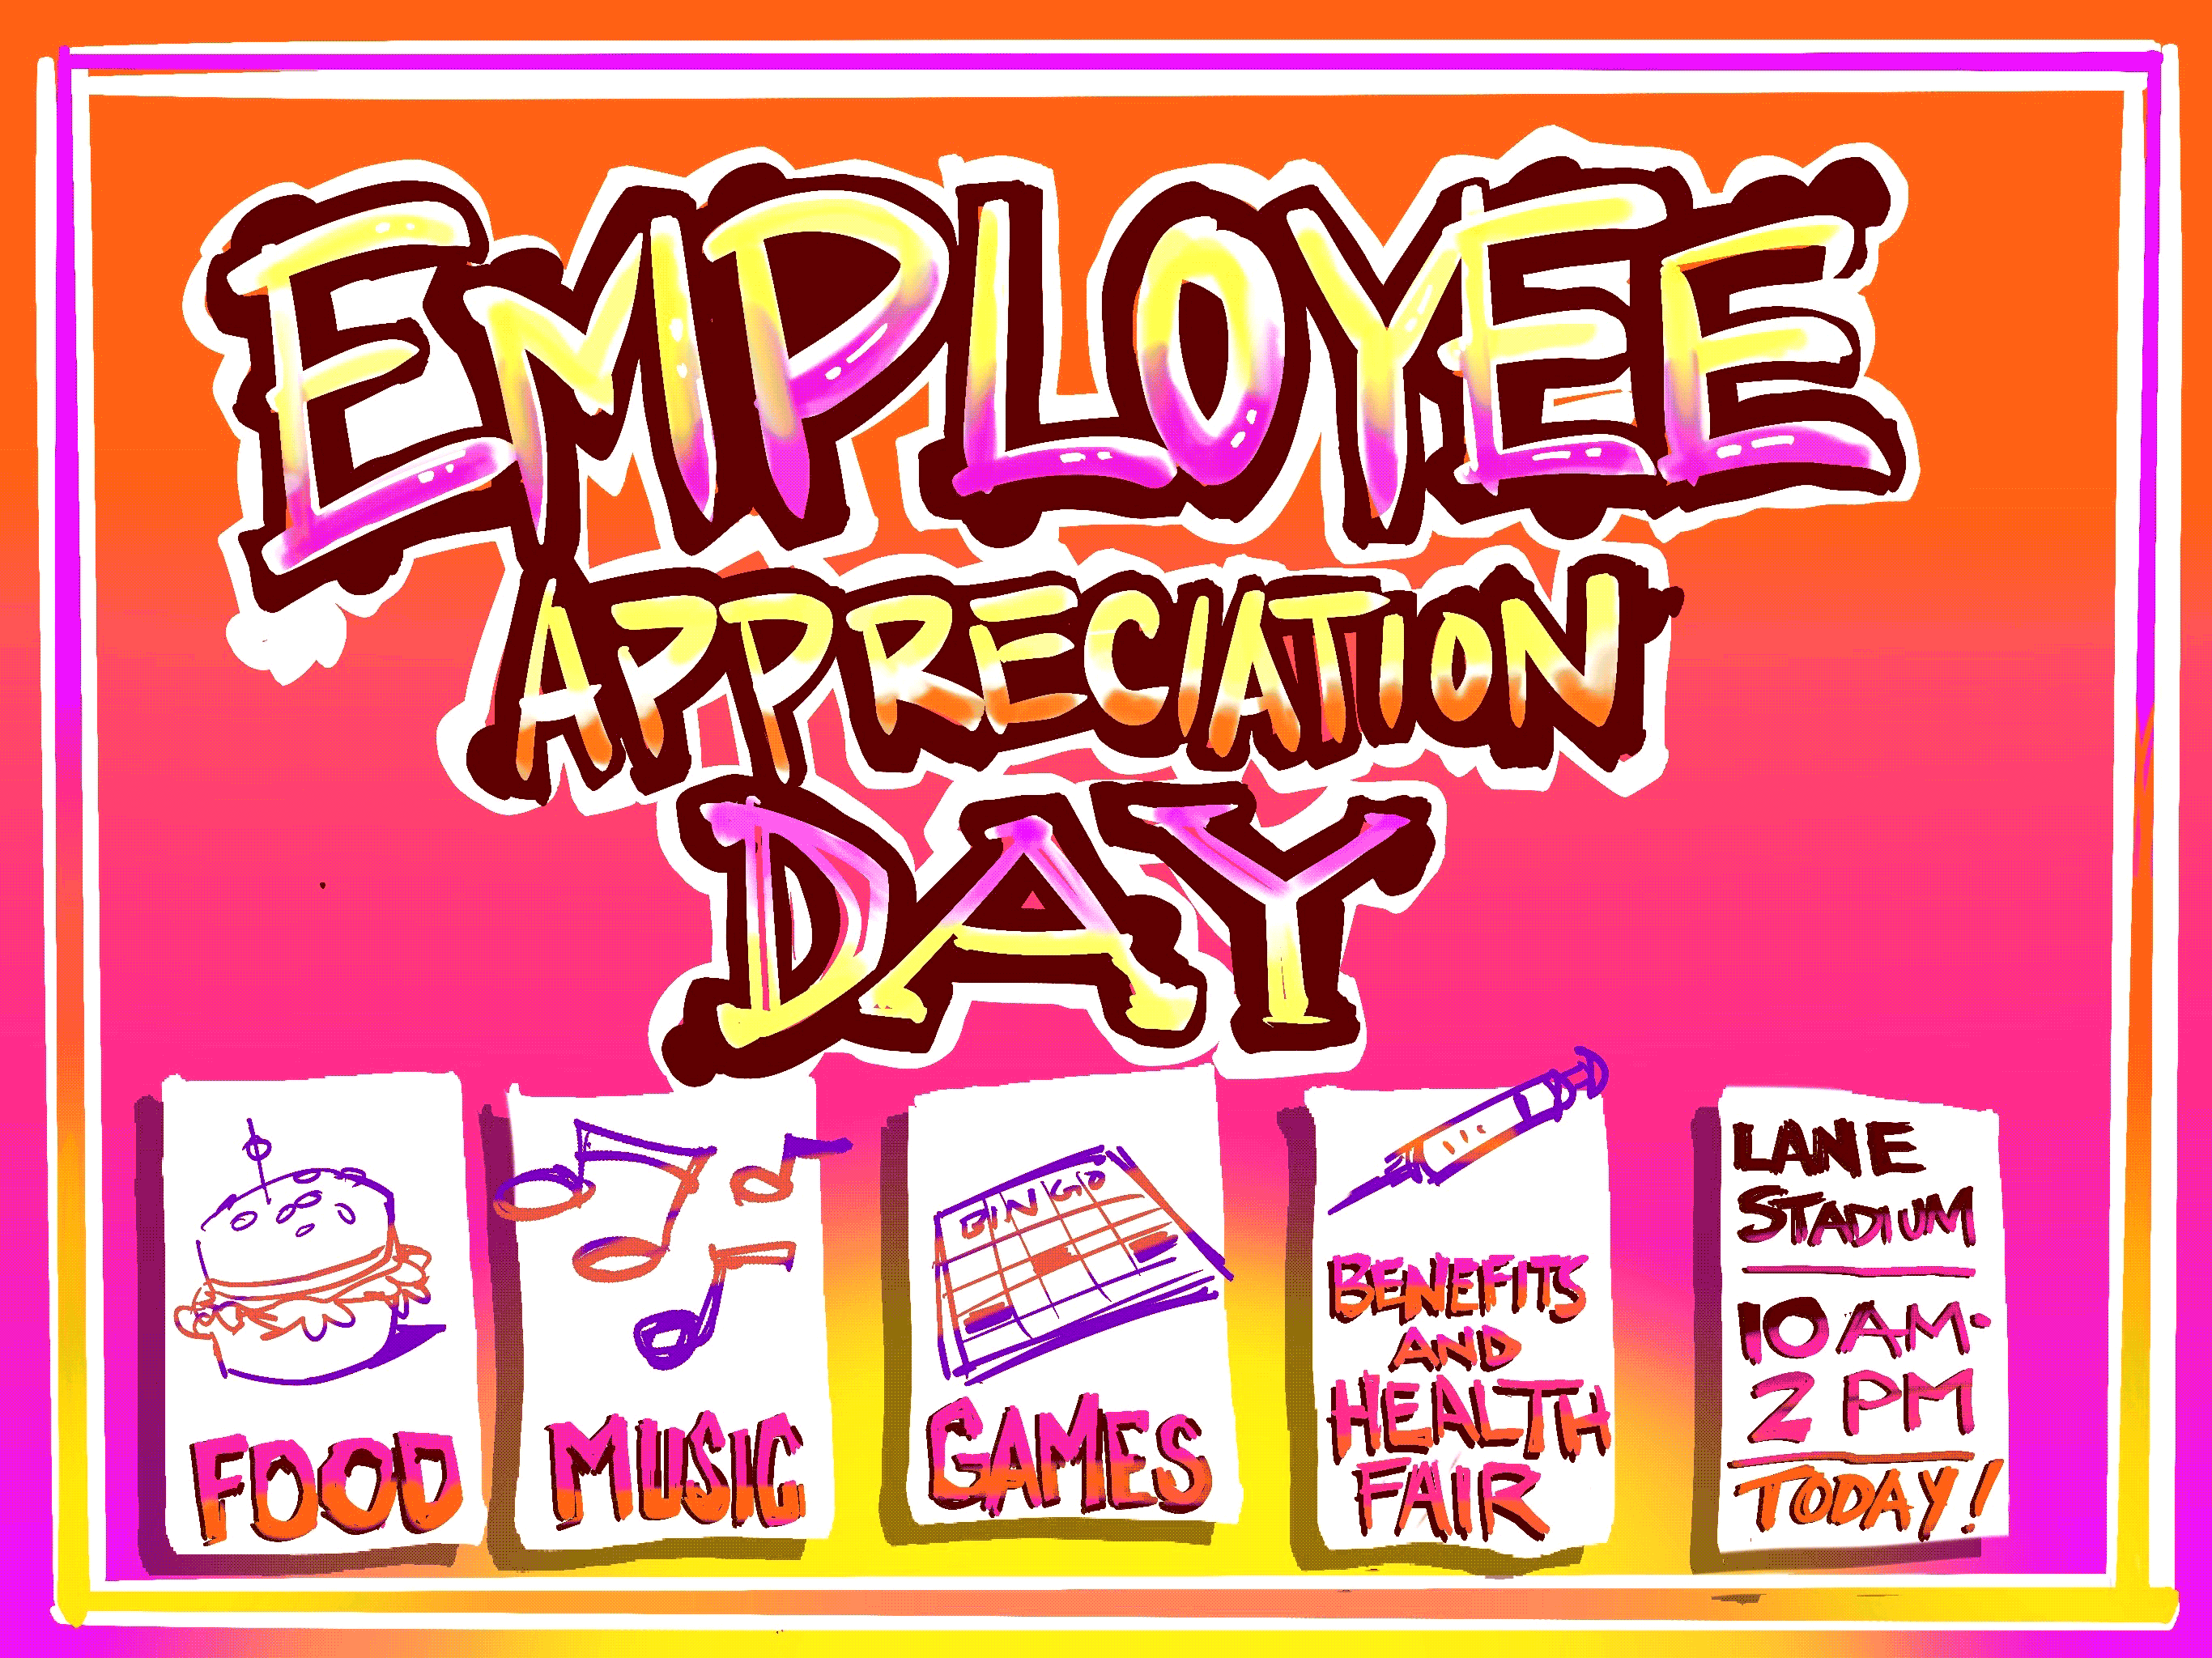 Digital sketch promoting employee appreciation day